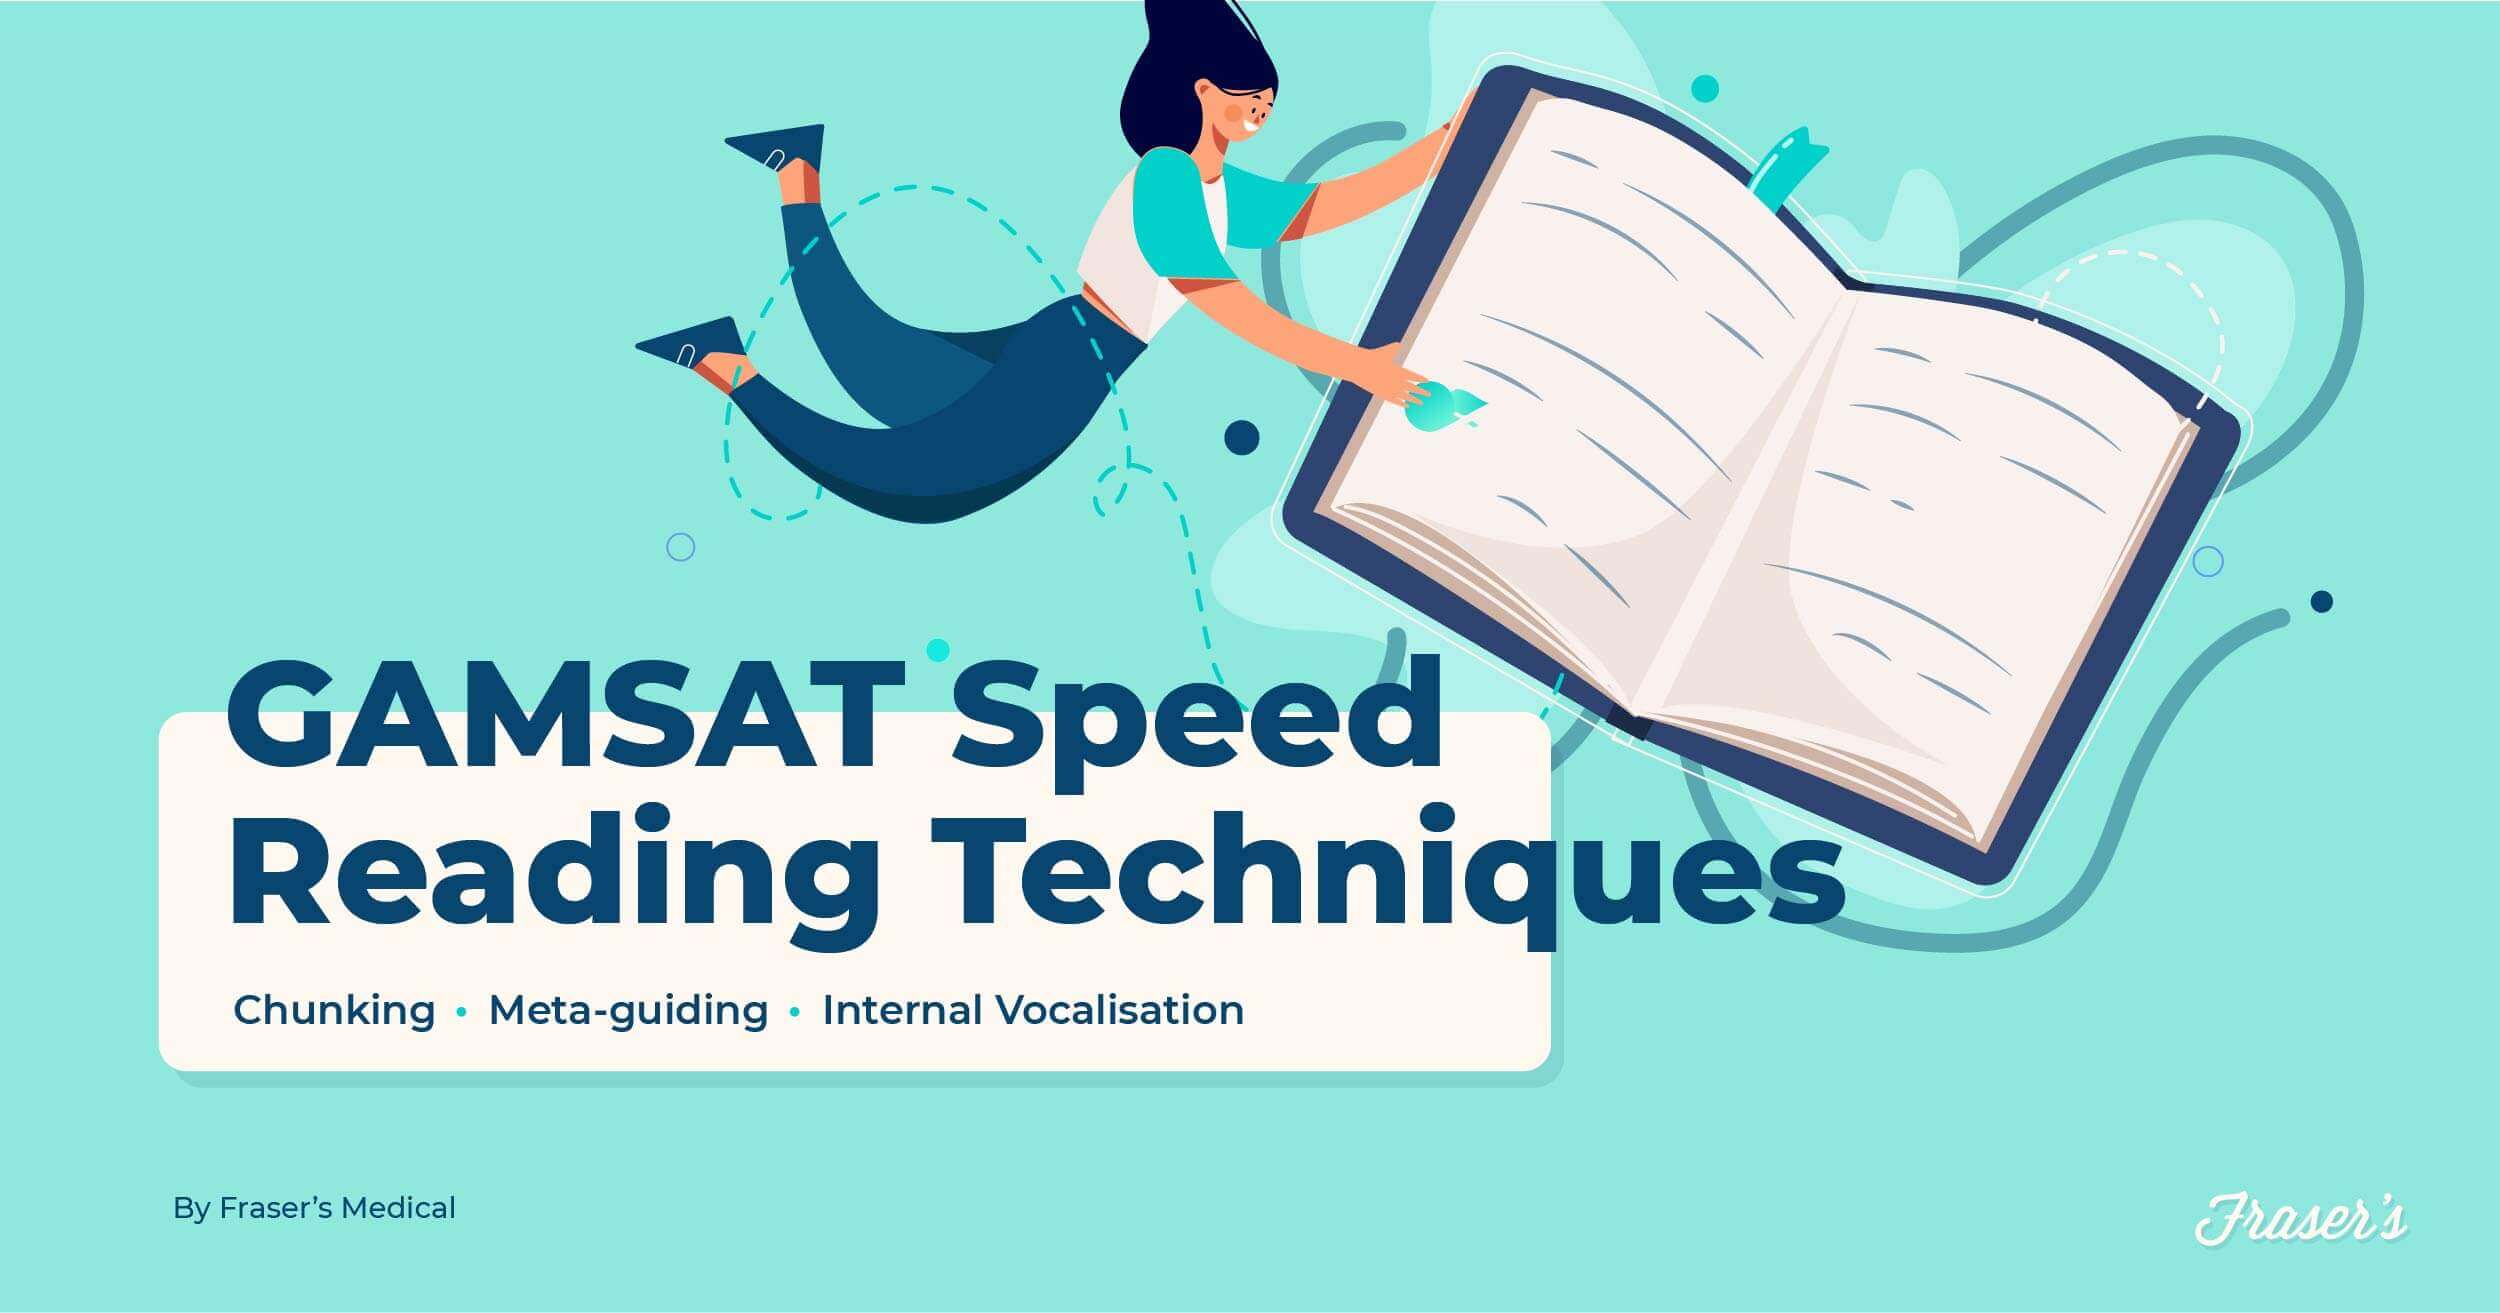 GAMSAT Speed Reading Technique featured image